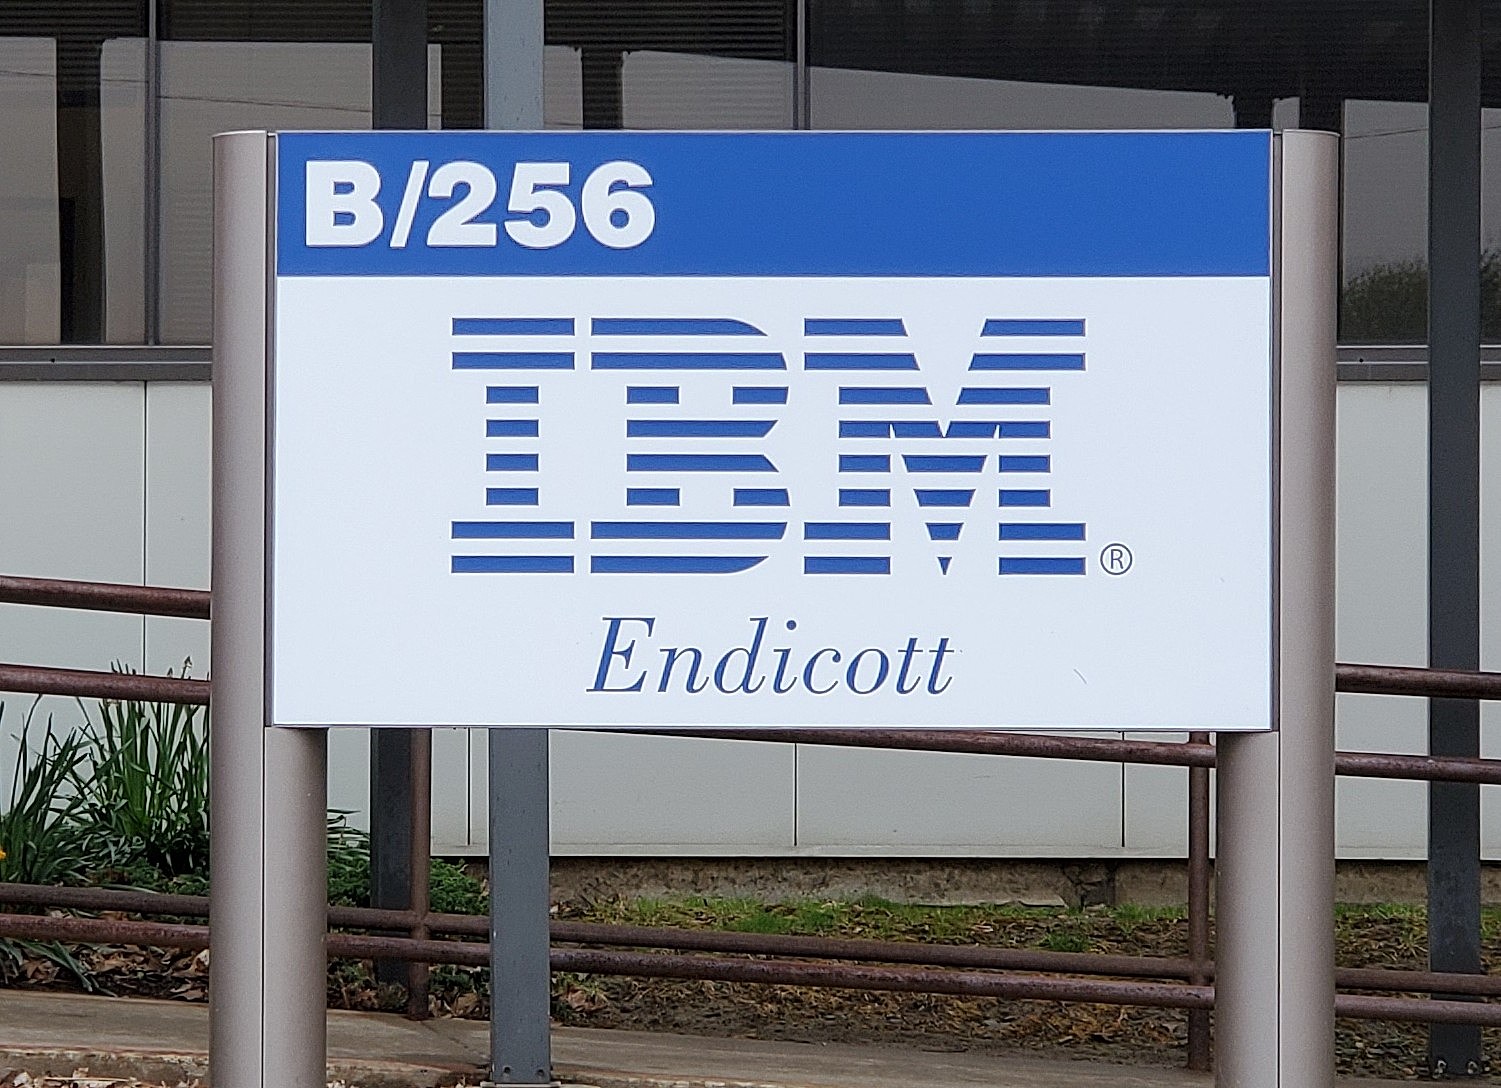 جار النفسيه جار النفسيه Lawsuit: IBM Discriminated Against Older  جار النفسيه جار النفسيه